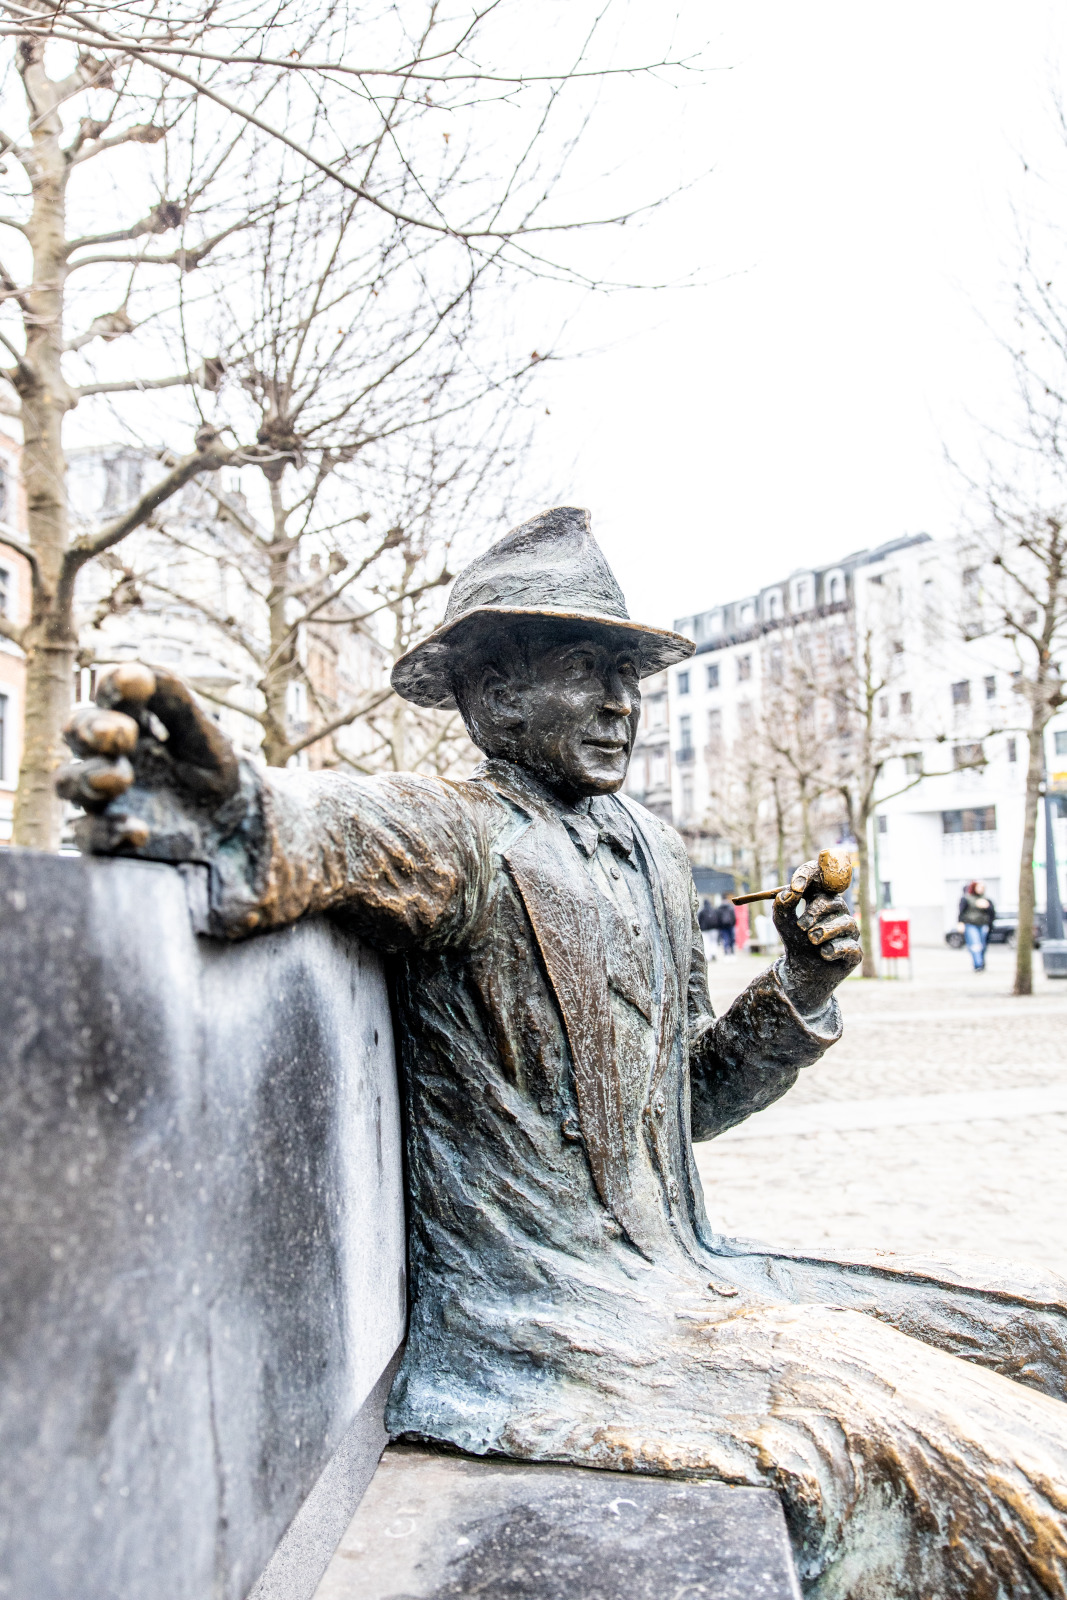 Fotografía en formato retrato de la estatua de Georges Simenon situada en Lieja en la Place Saint-Lambert